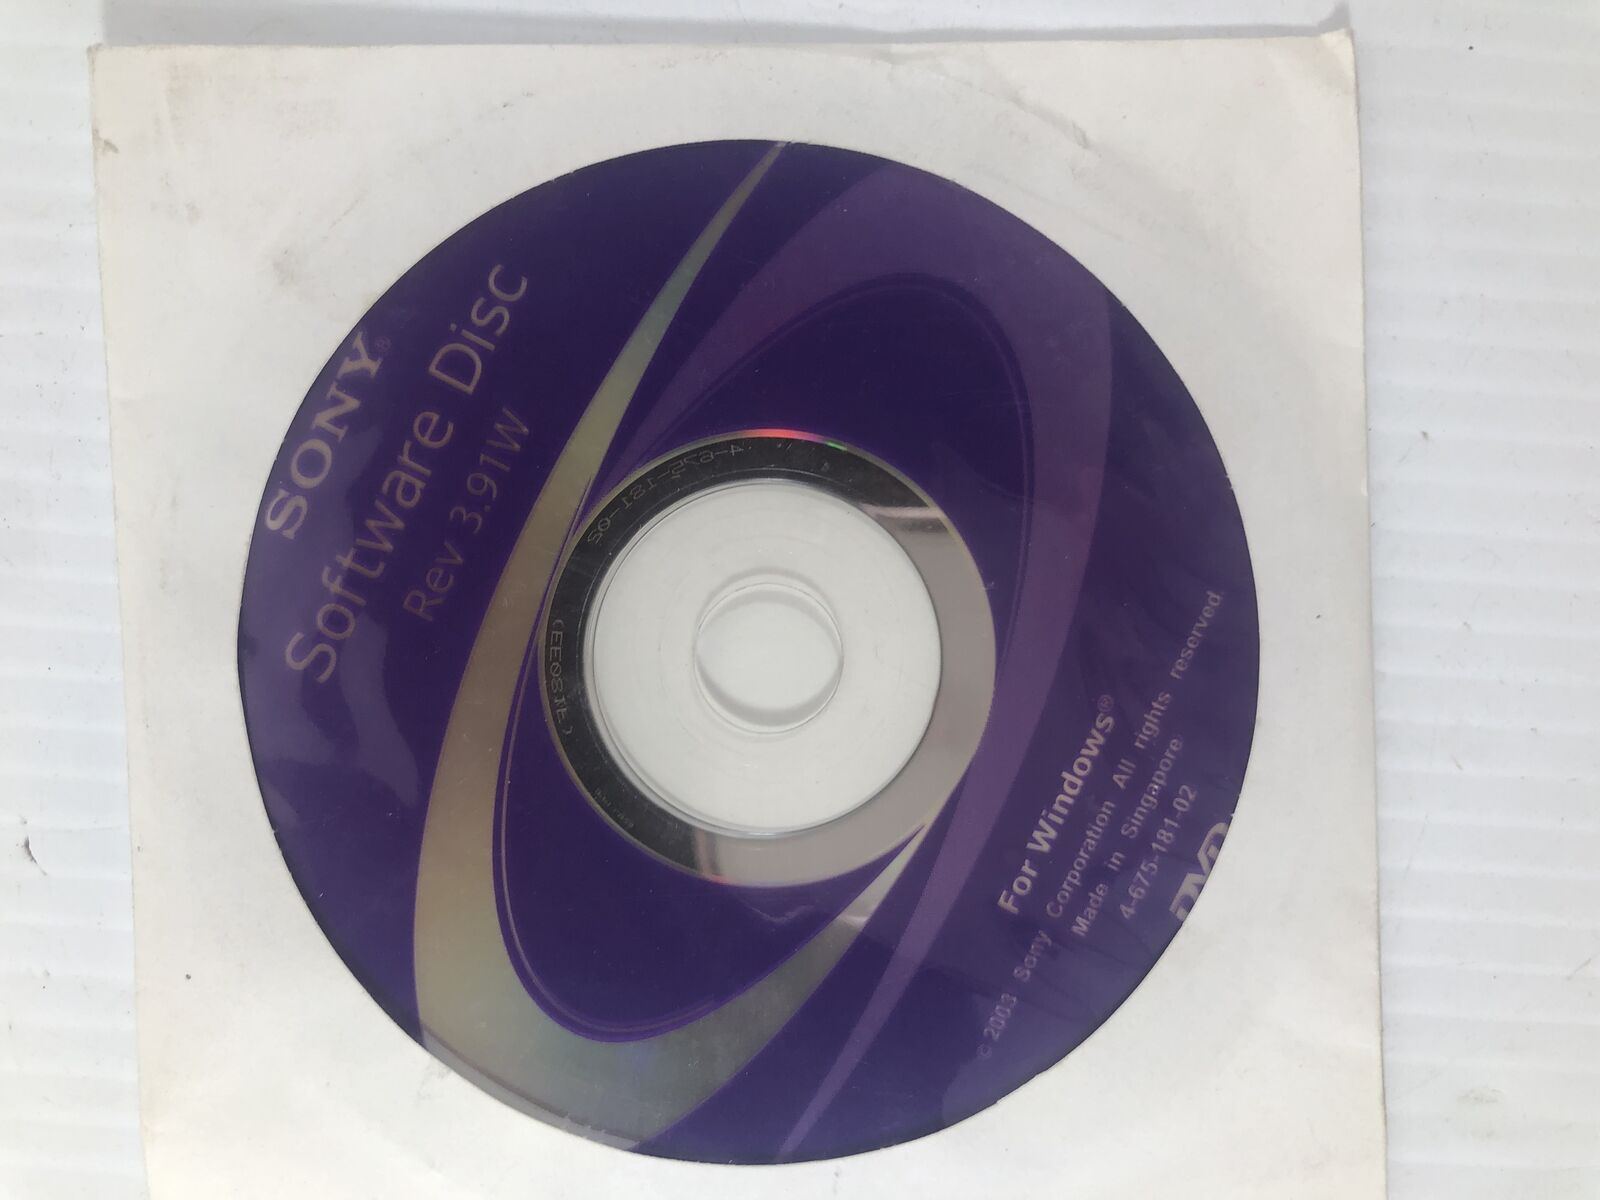 Sony Software Disc Rev. 3.91W for Windows 2003 CD